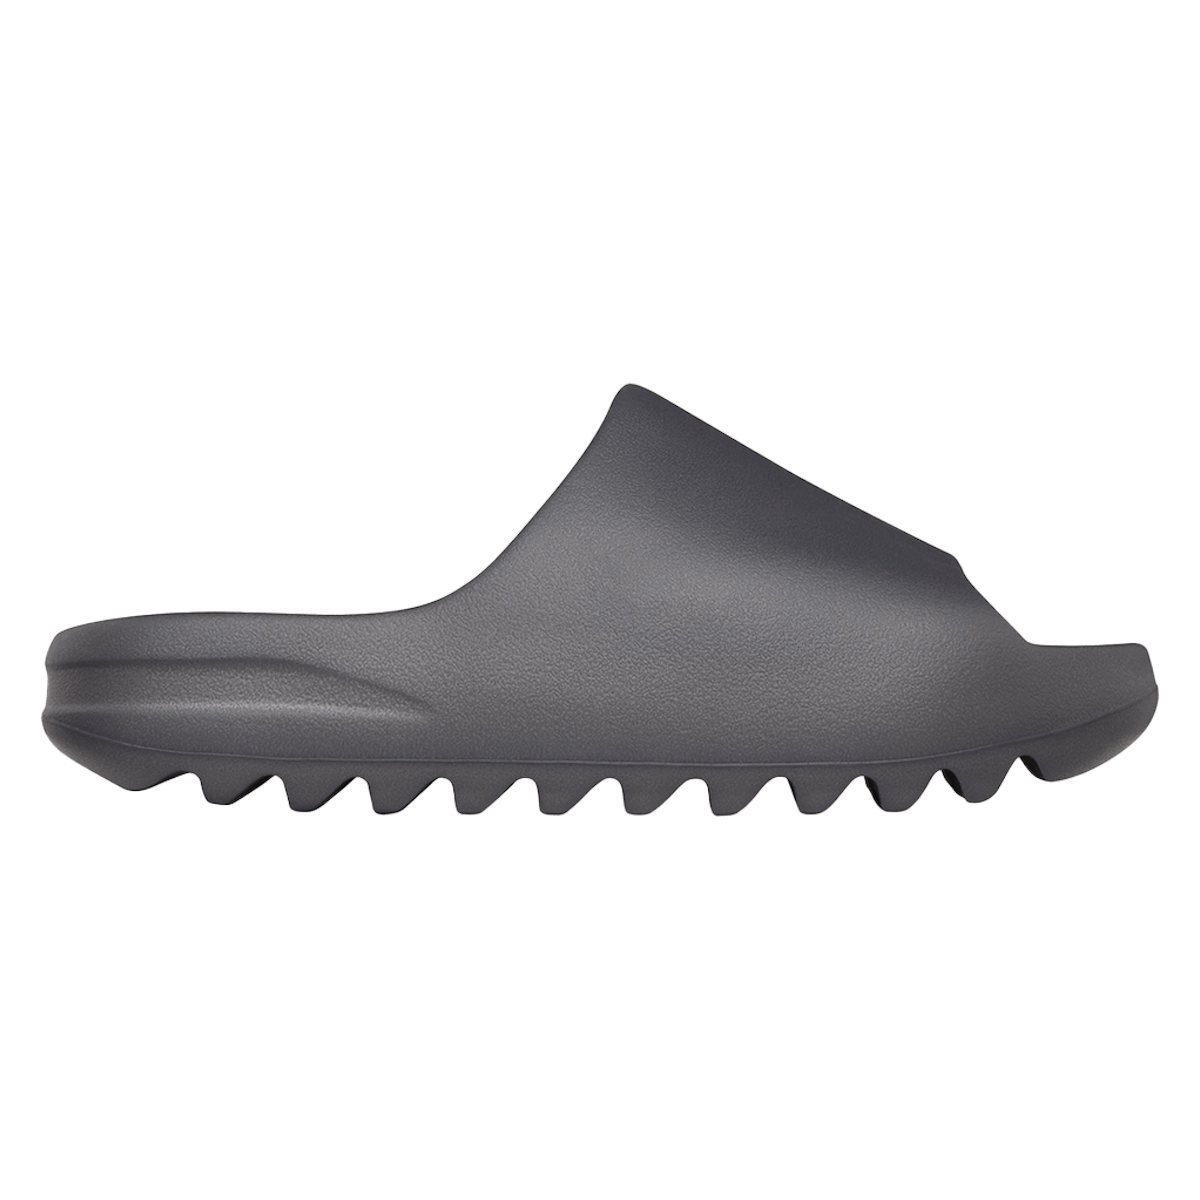 adidas Yeezy Slide "Granite"